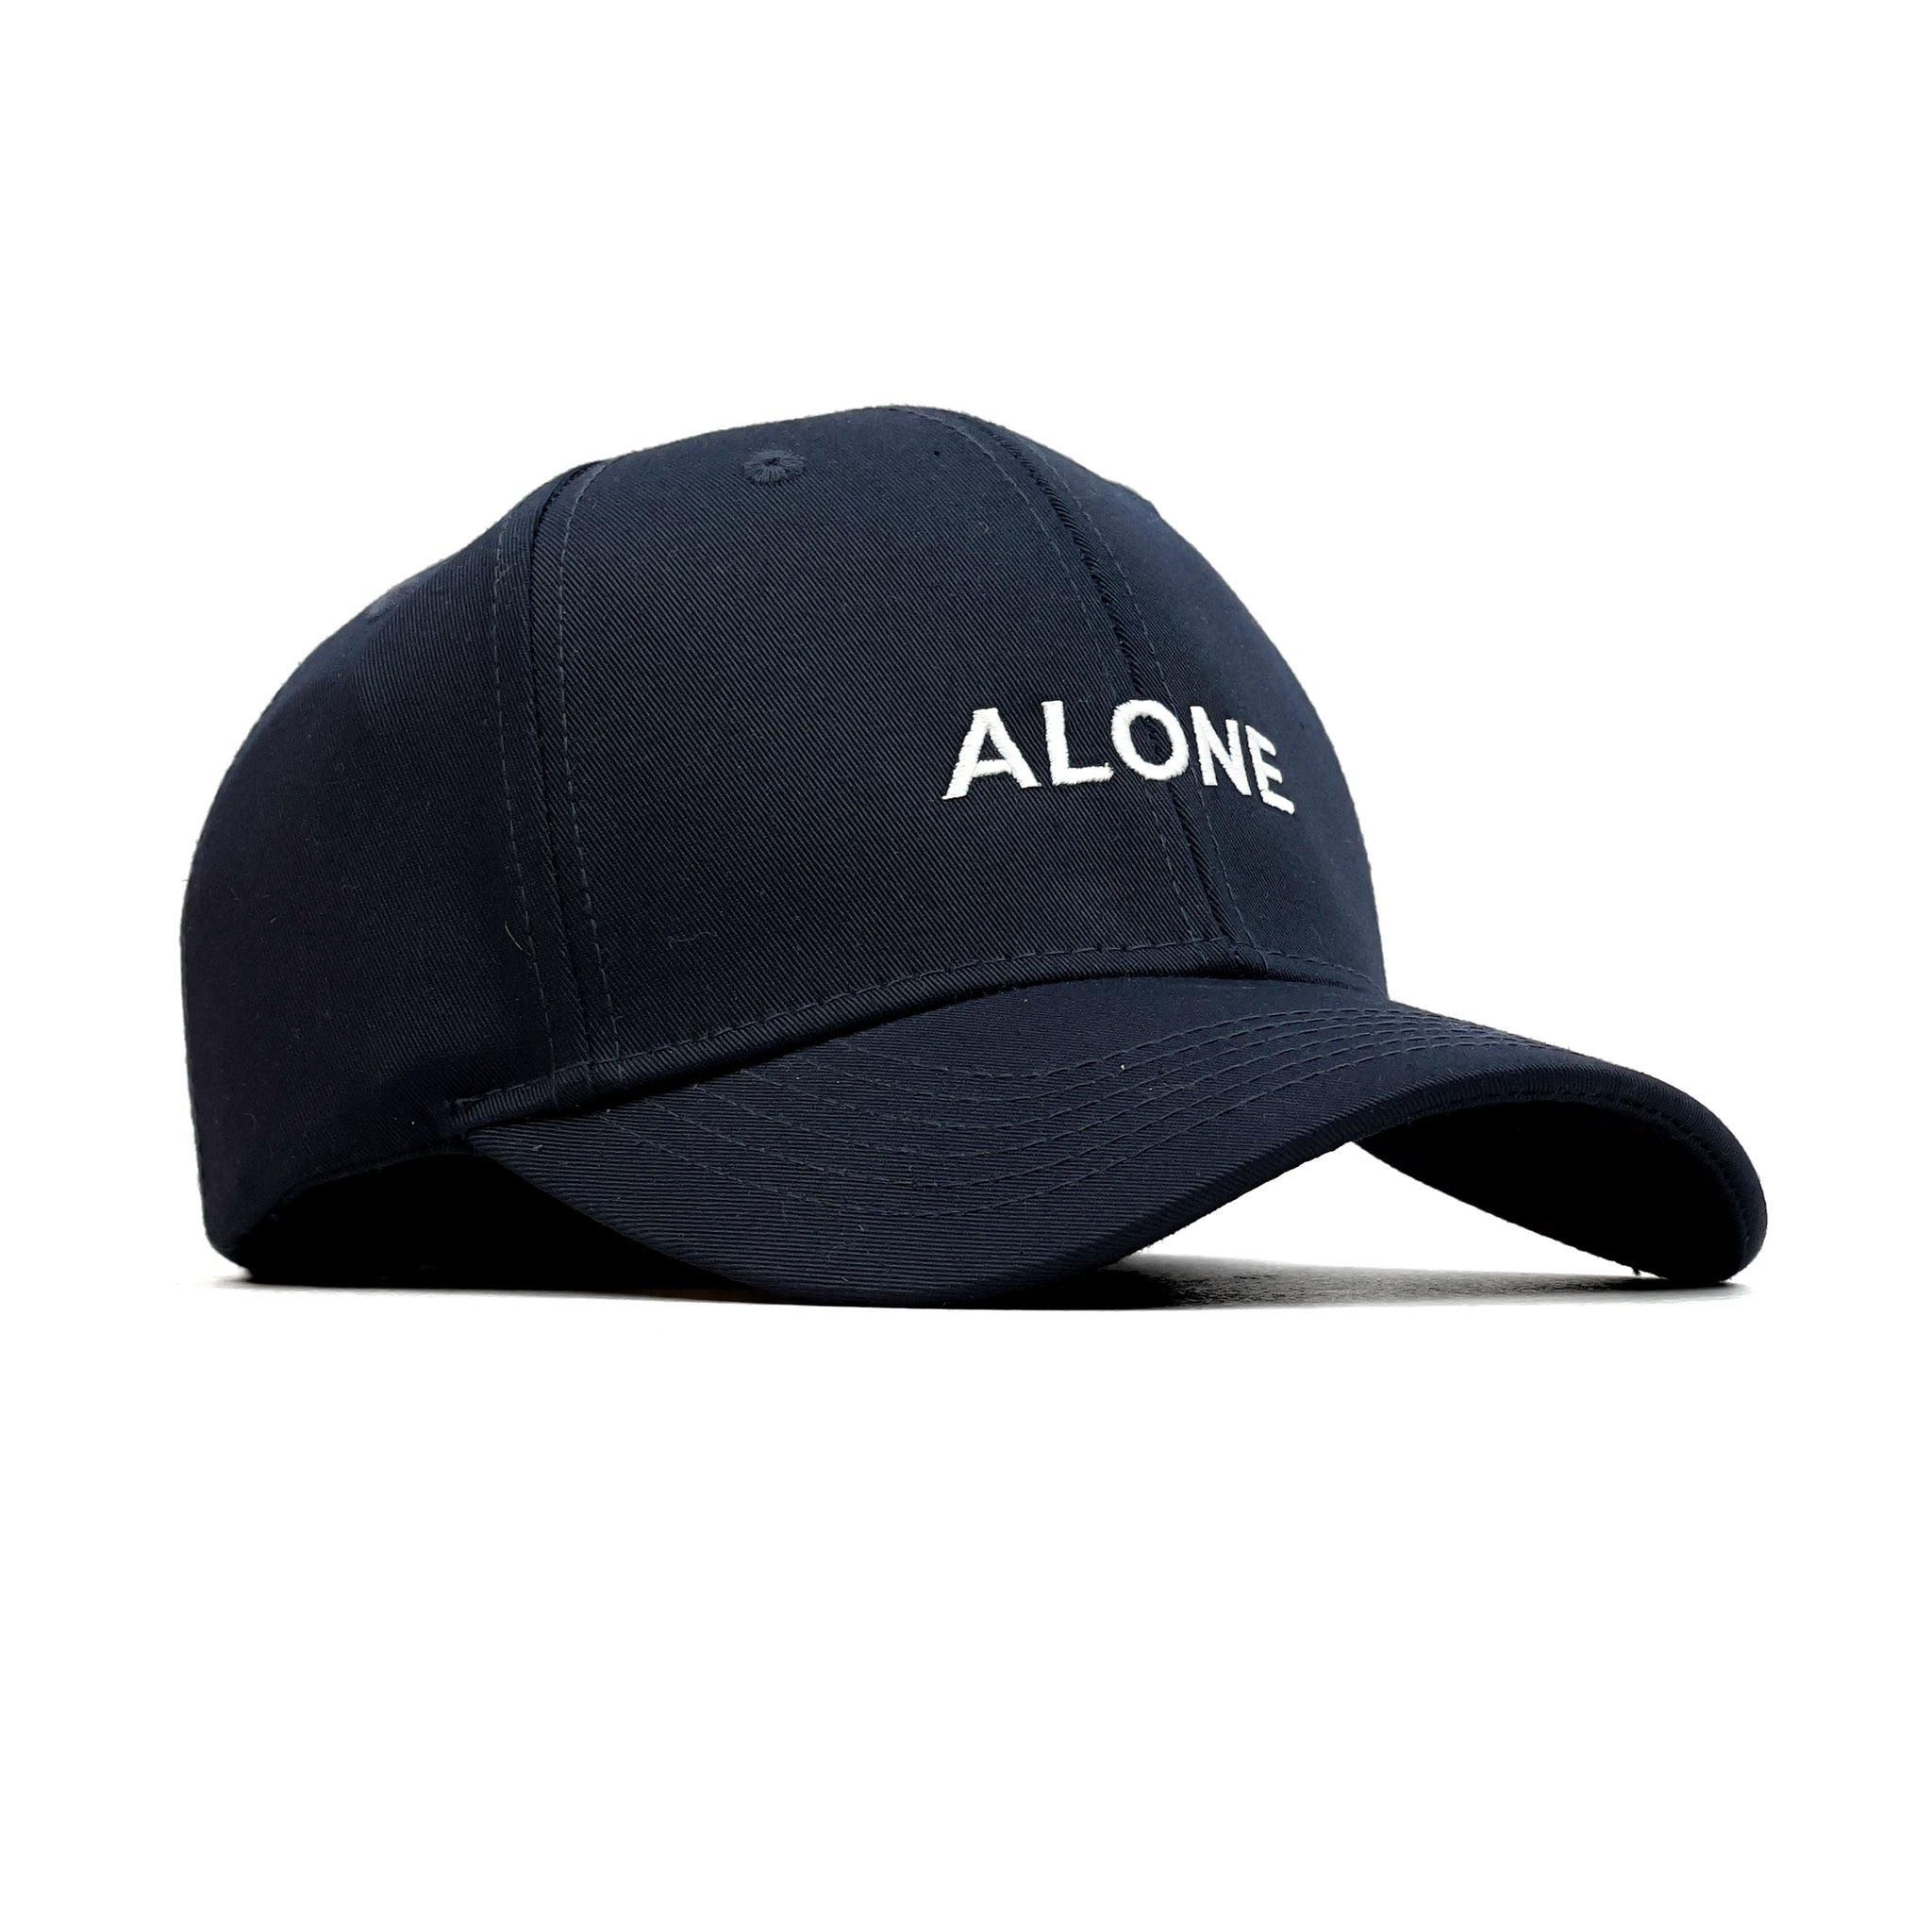 HEAD GEAR ALONE CAP